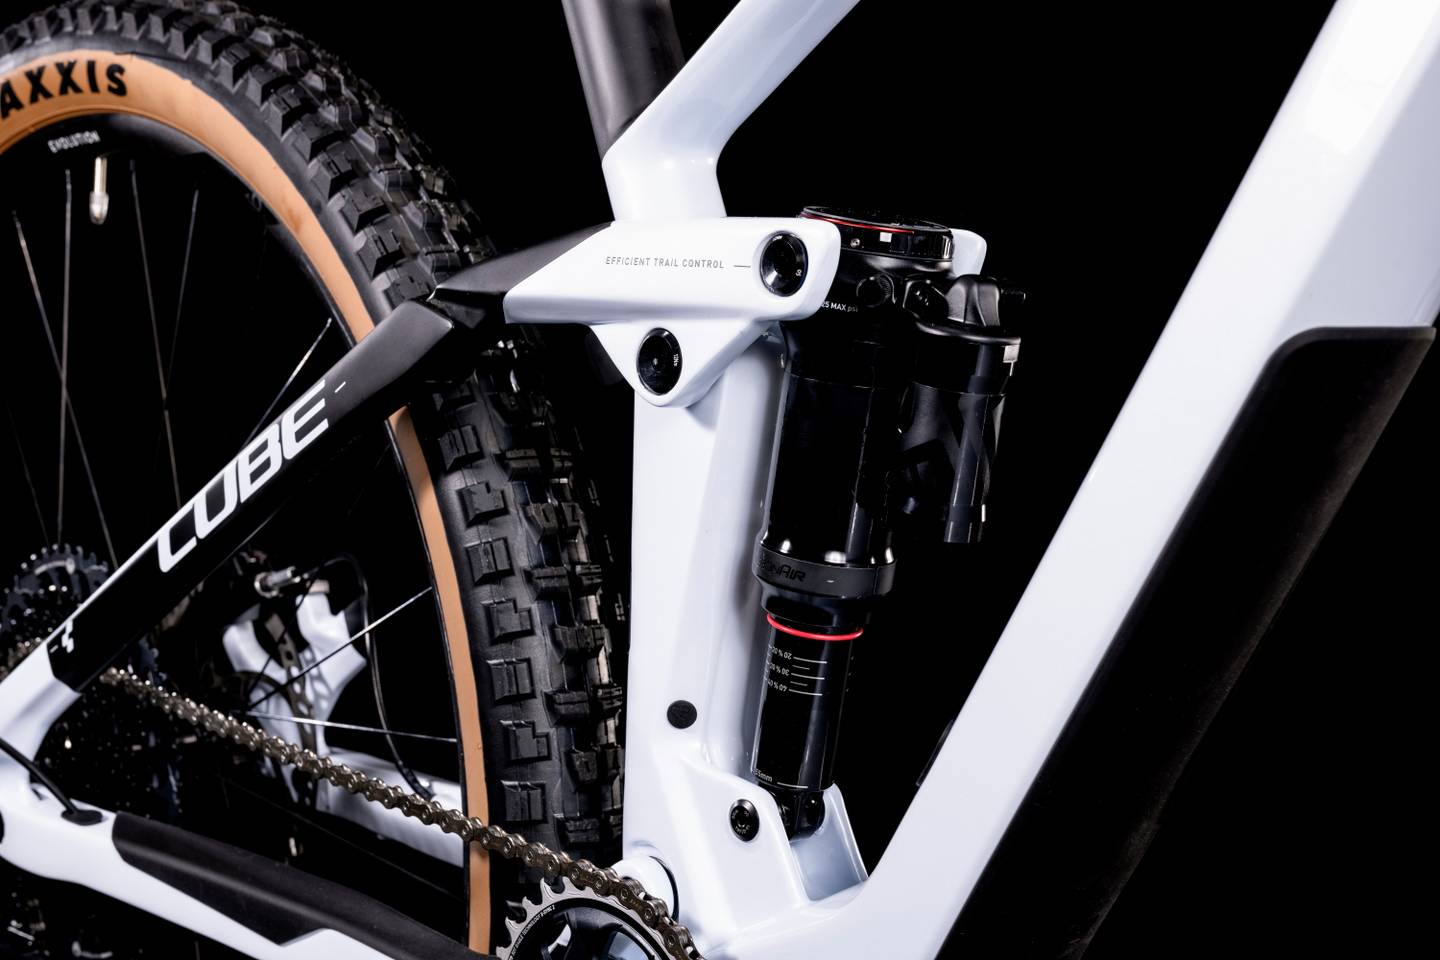 Bicicleta Stereo 150 C62 Race 2022